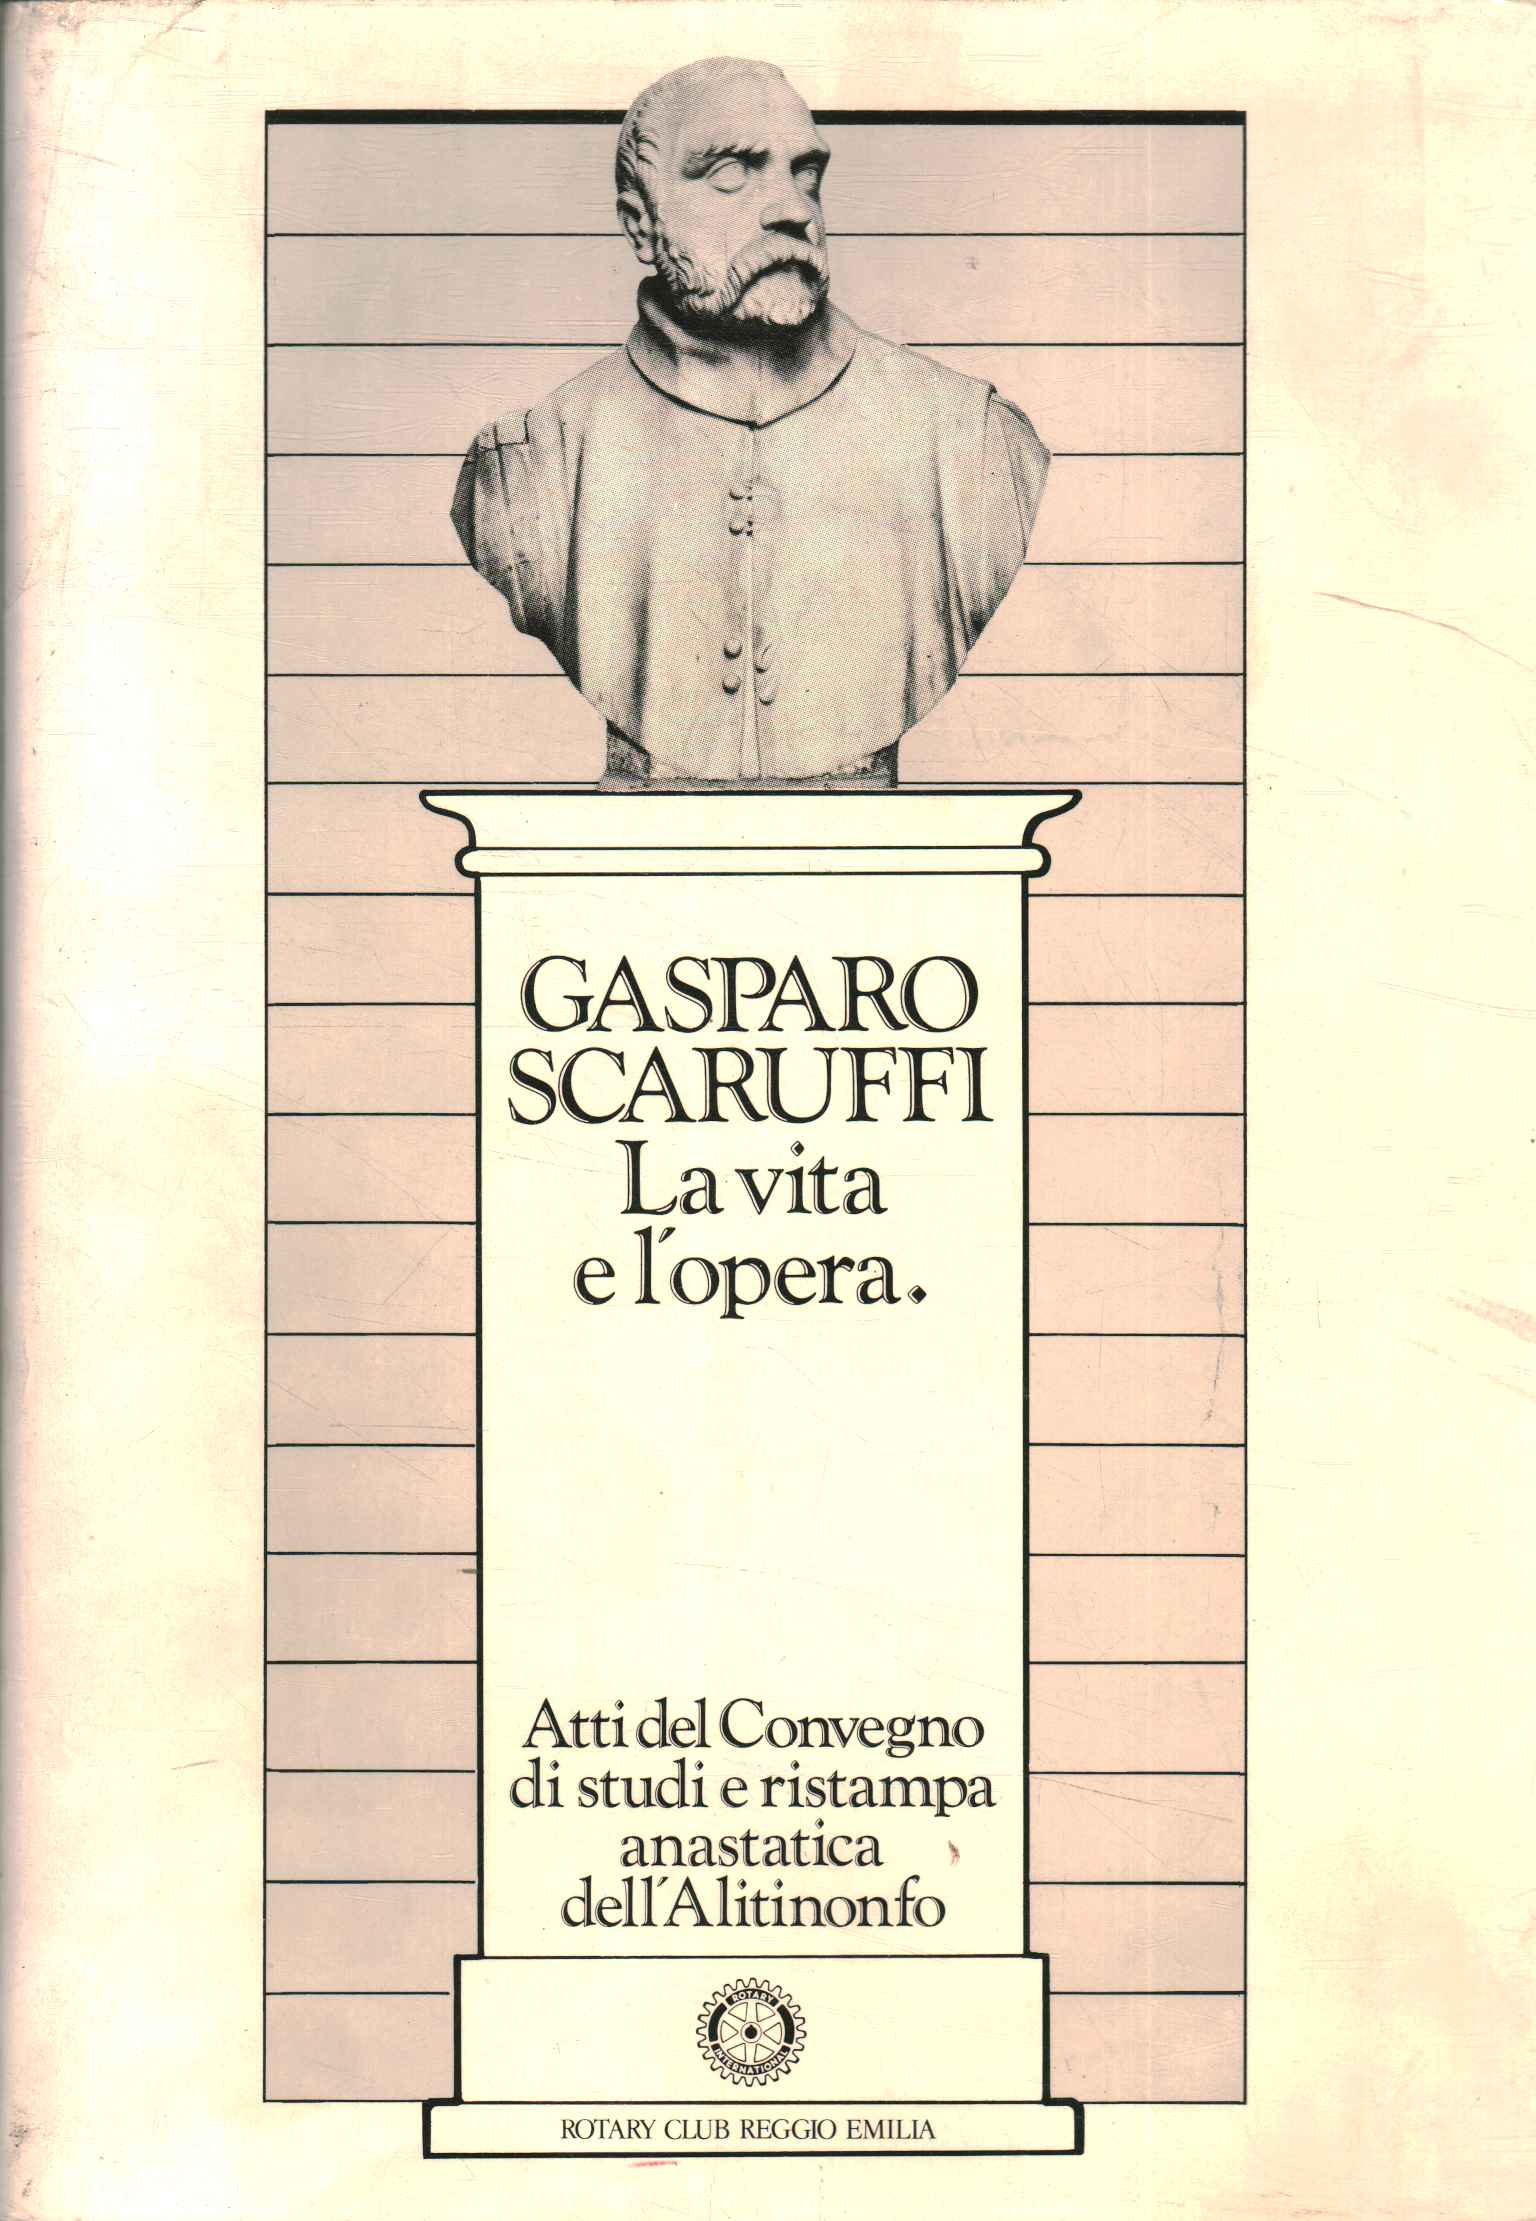 Gasparo Scaruffi. Life and the apostrophe